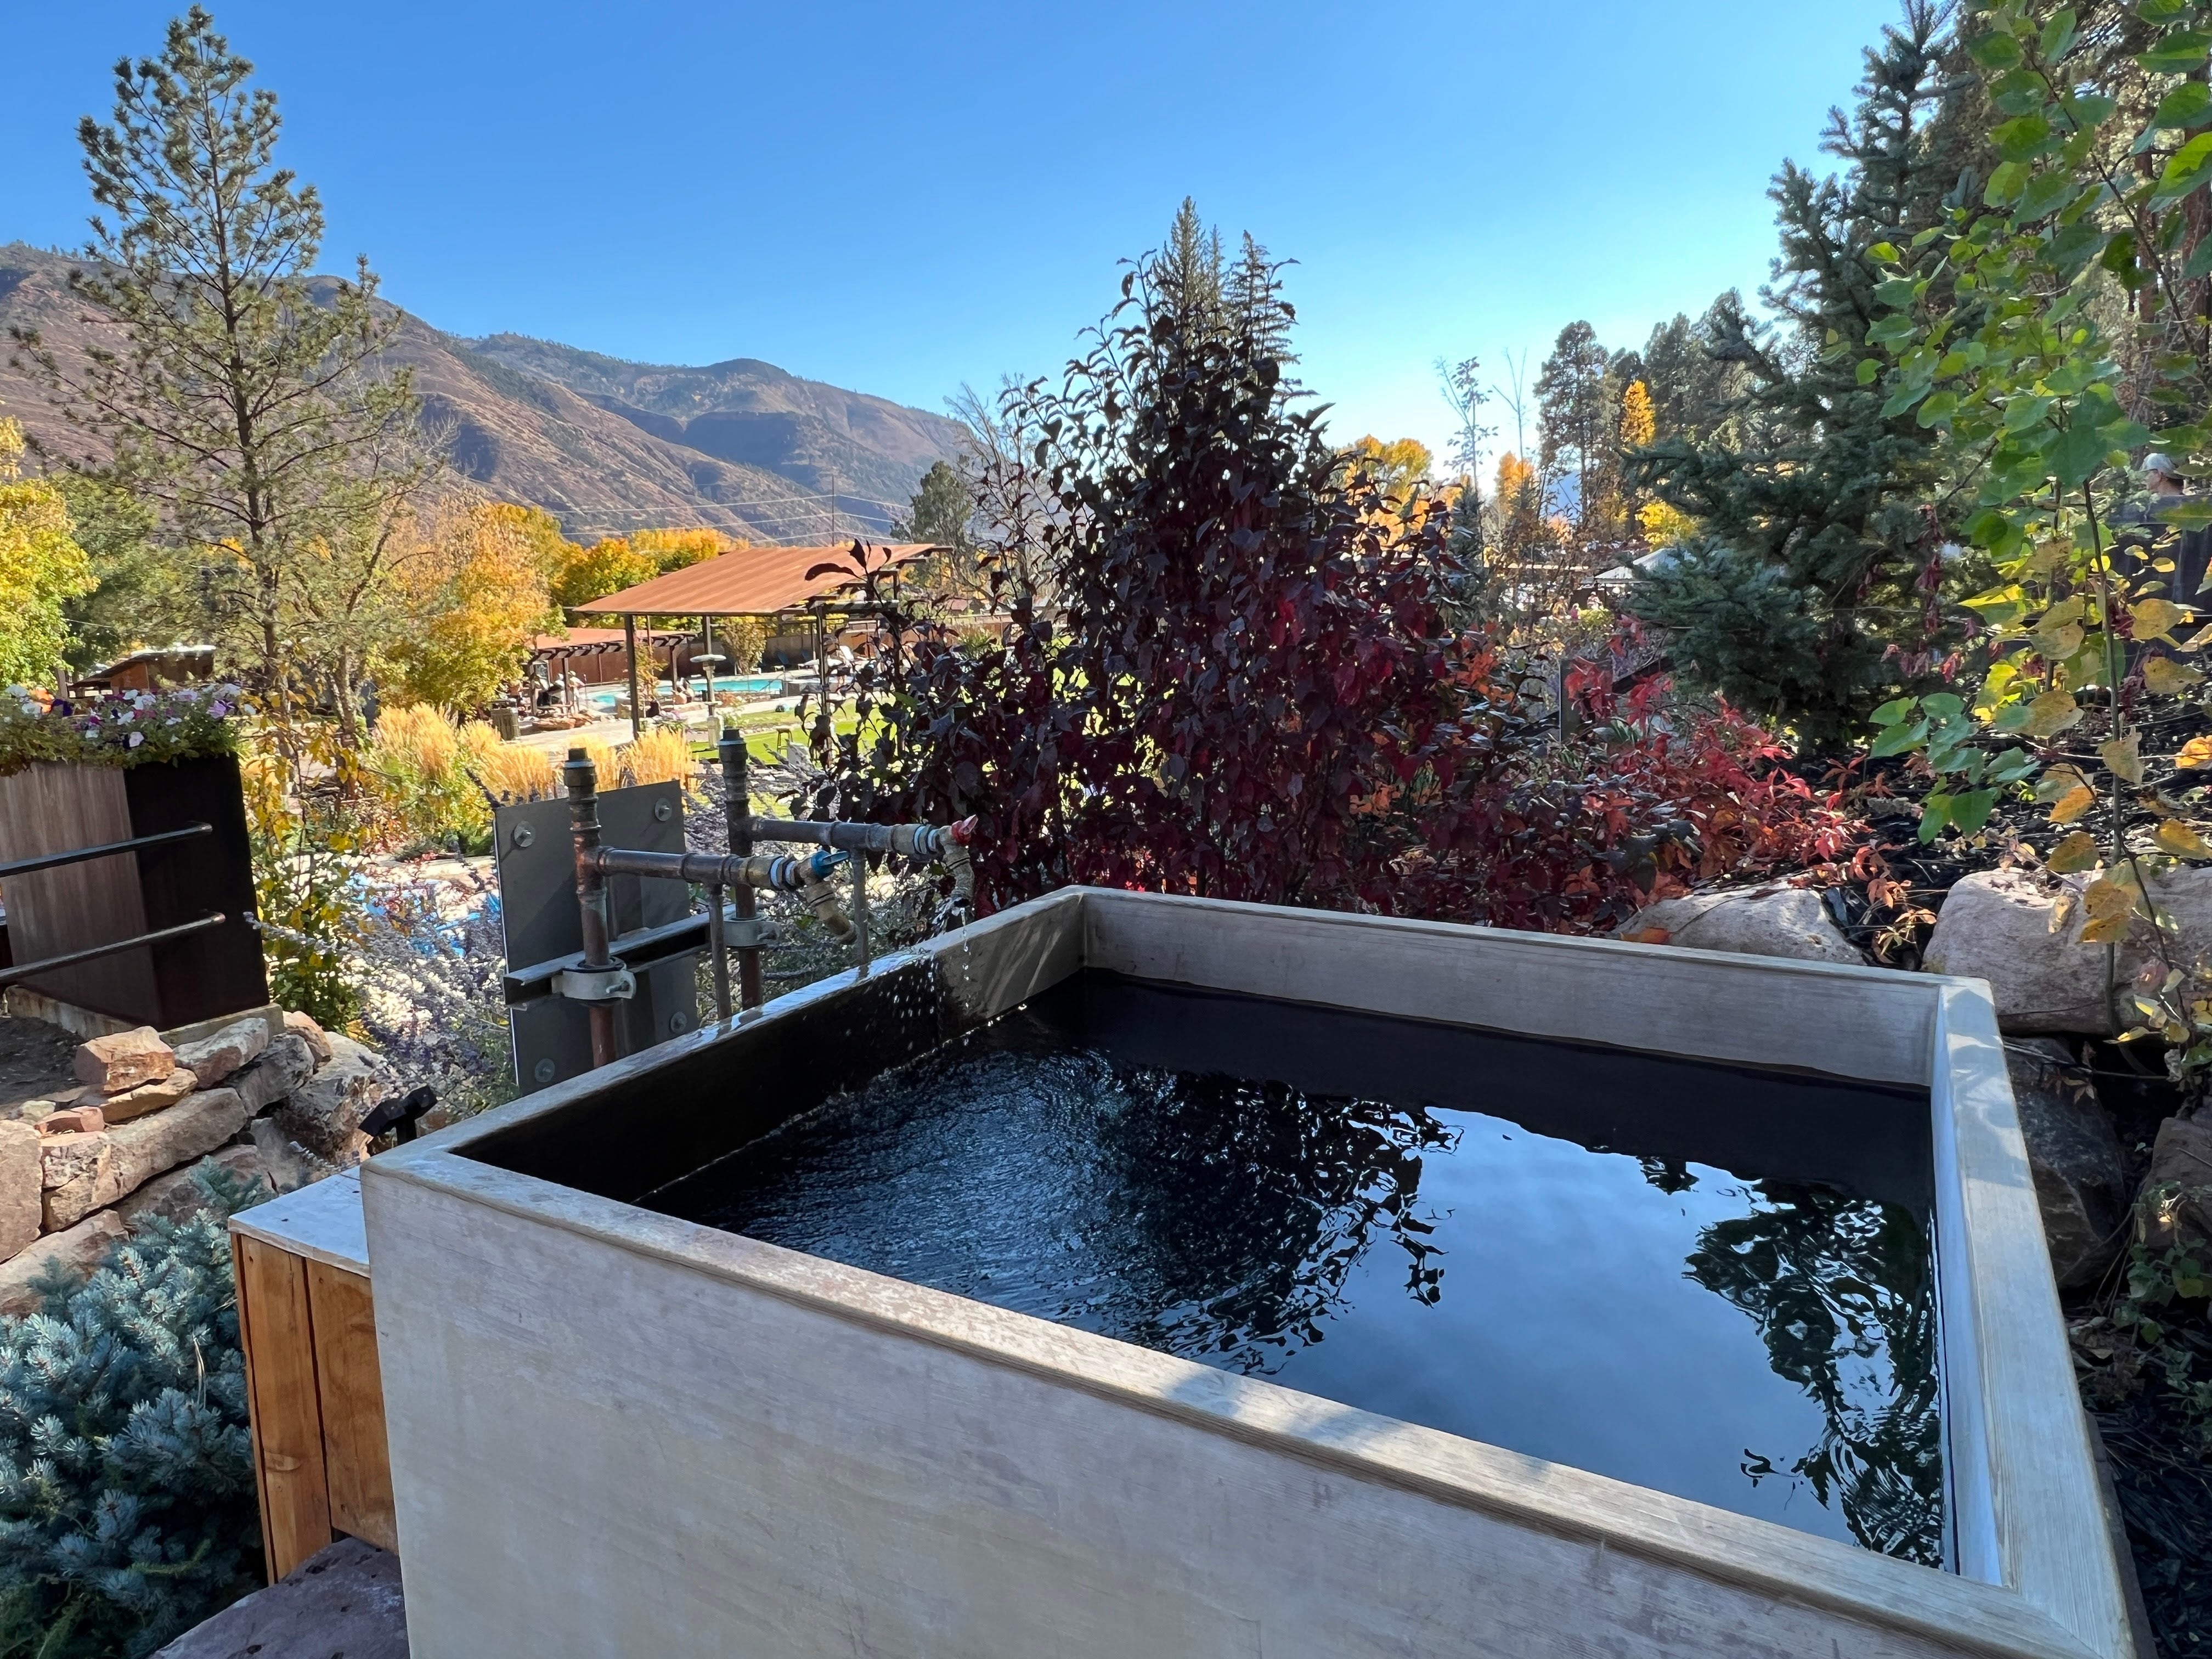 Private cedar soaking tub at Durango Hot Springs